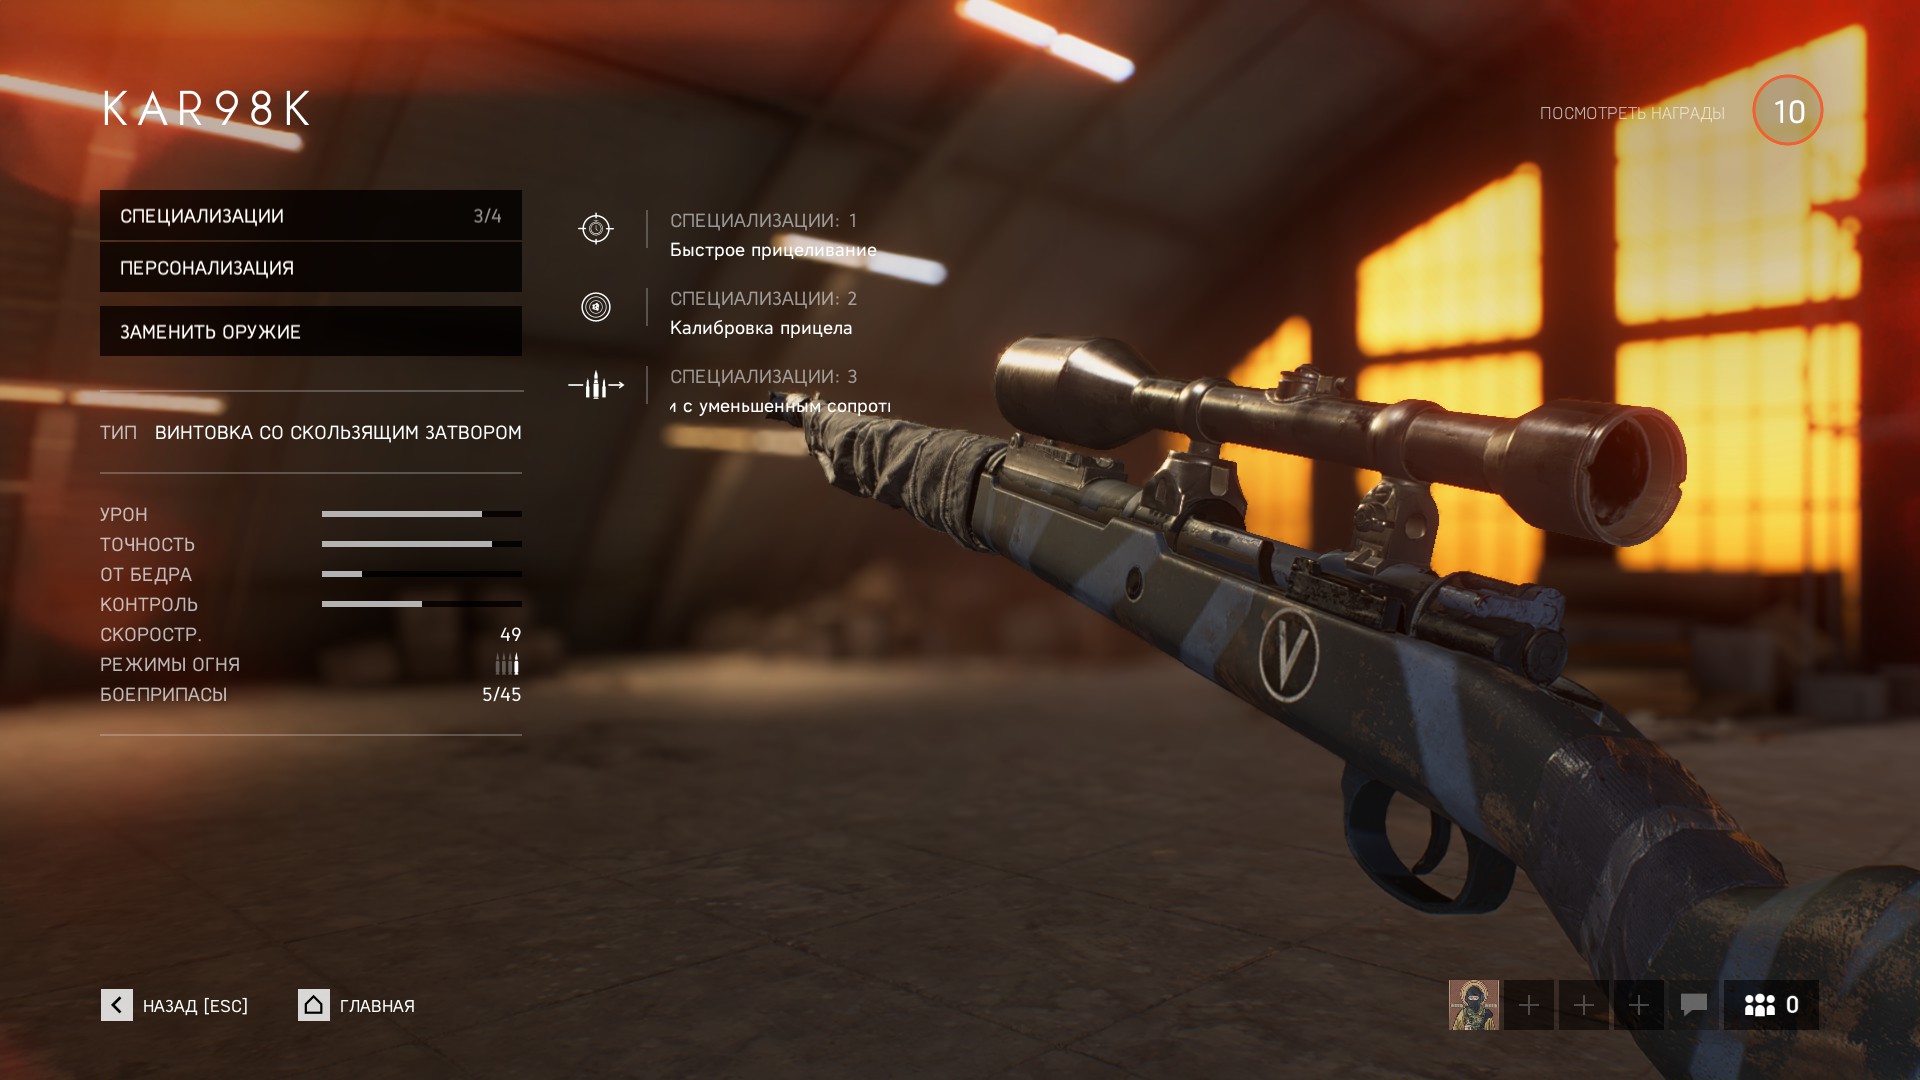 Battlefield 5 Best Sniper Rifle - All BF5 Sniper Rifles Ranked